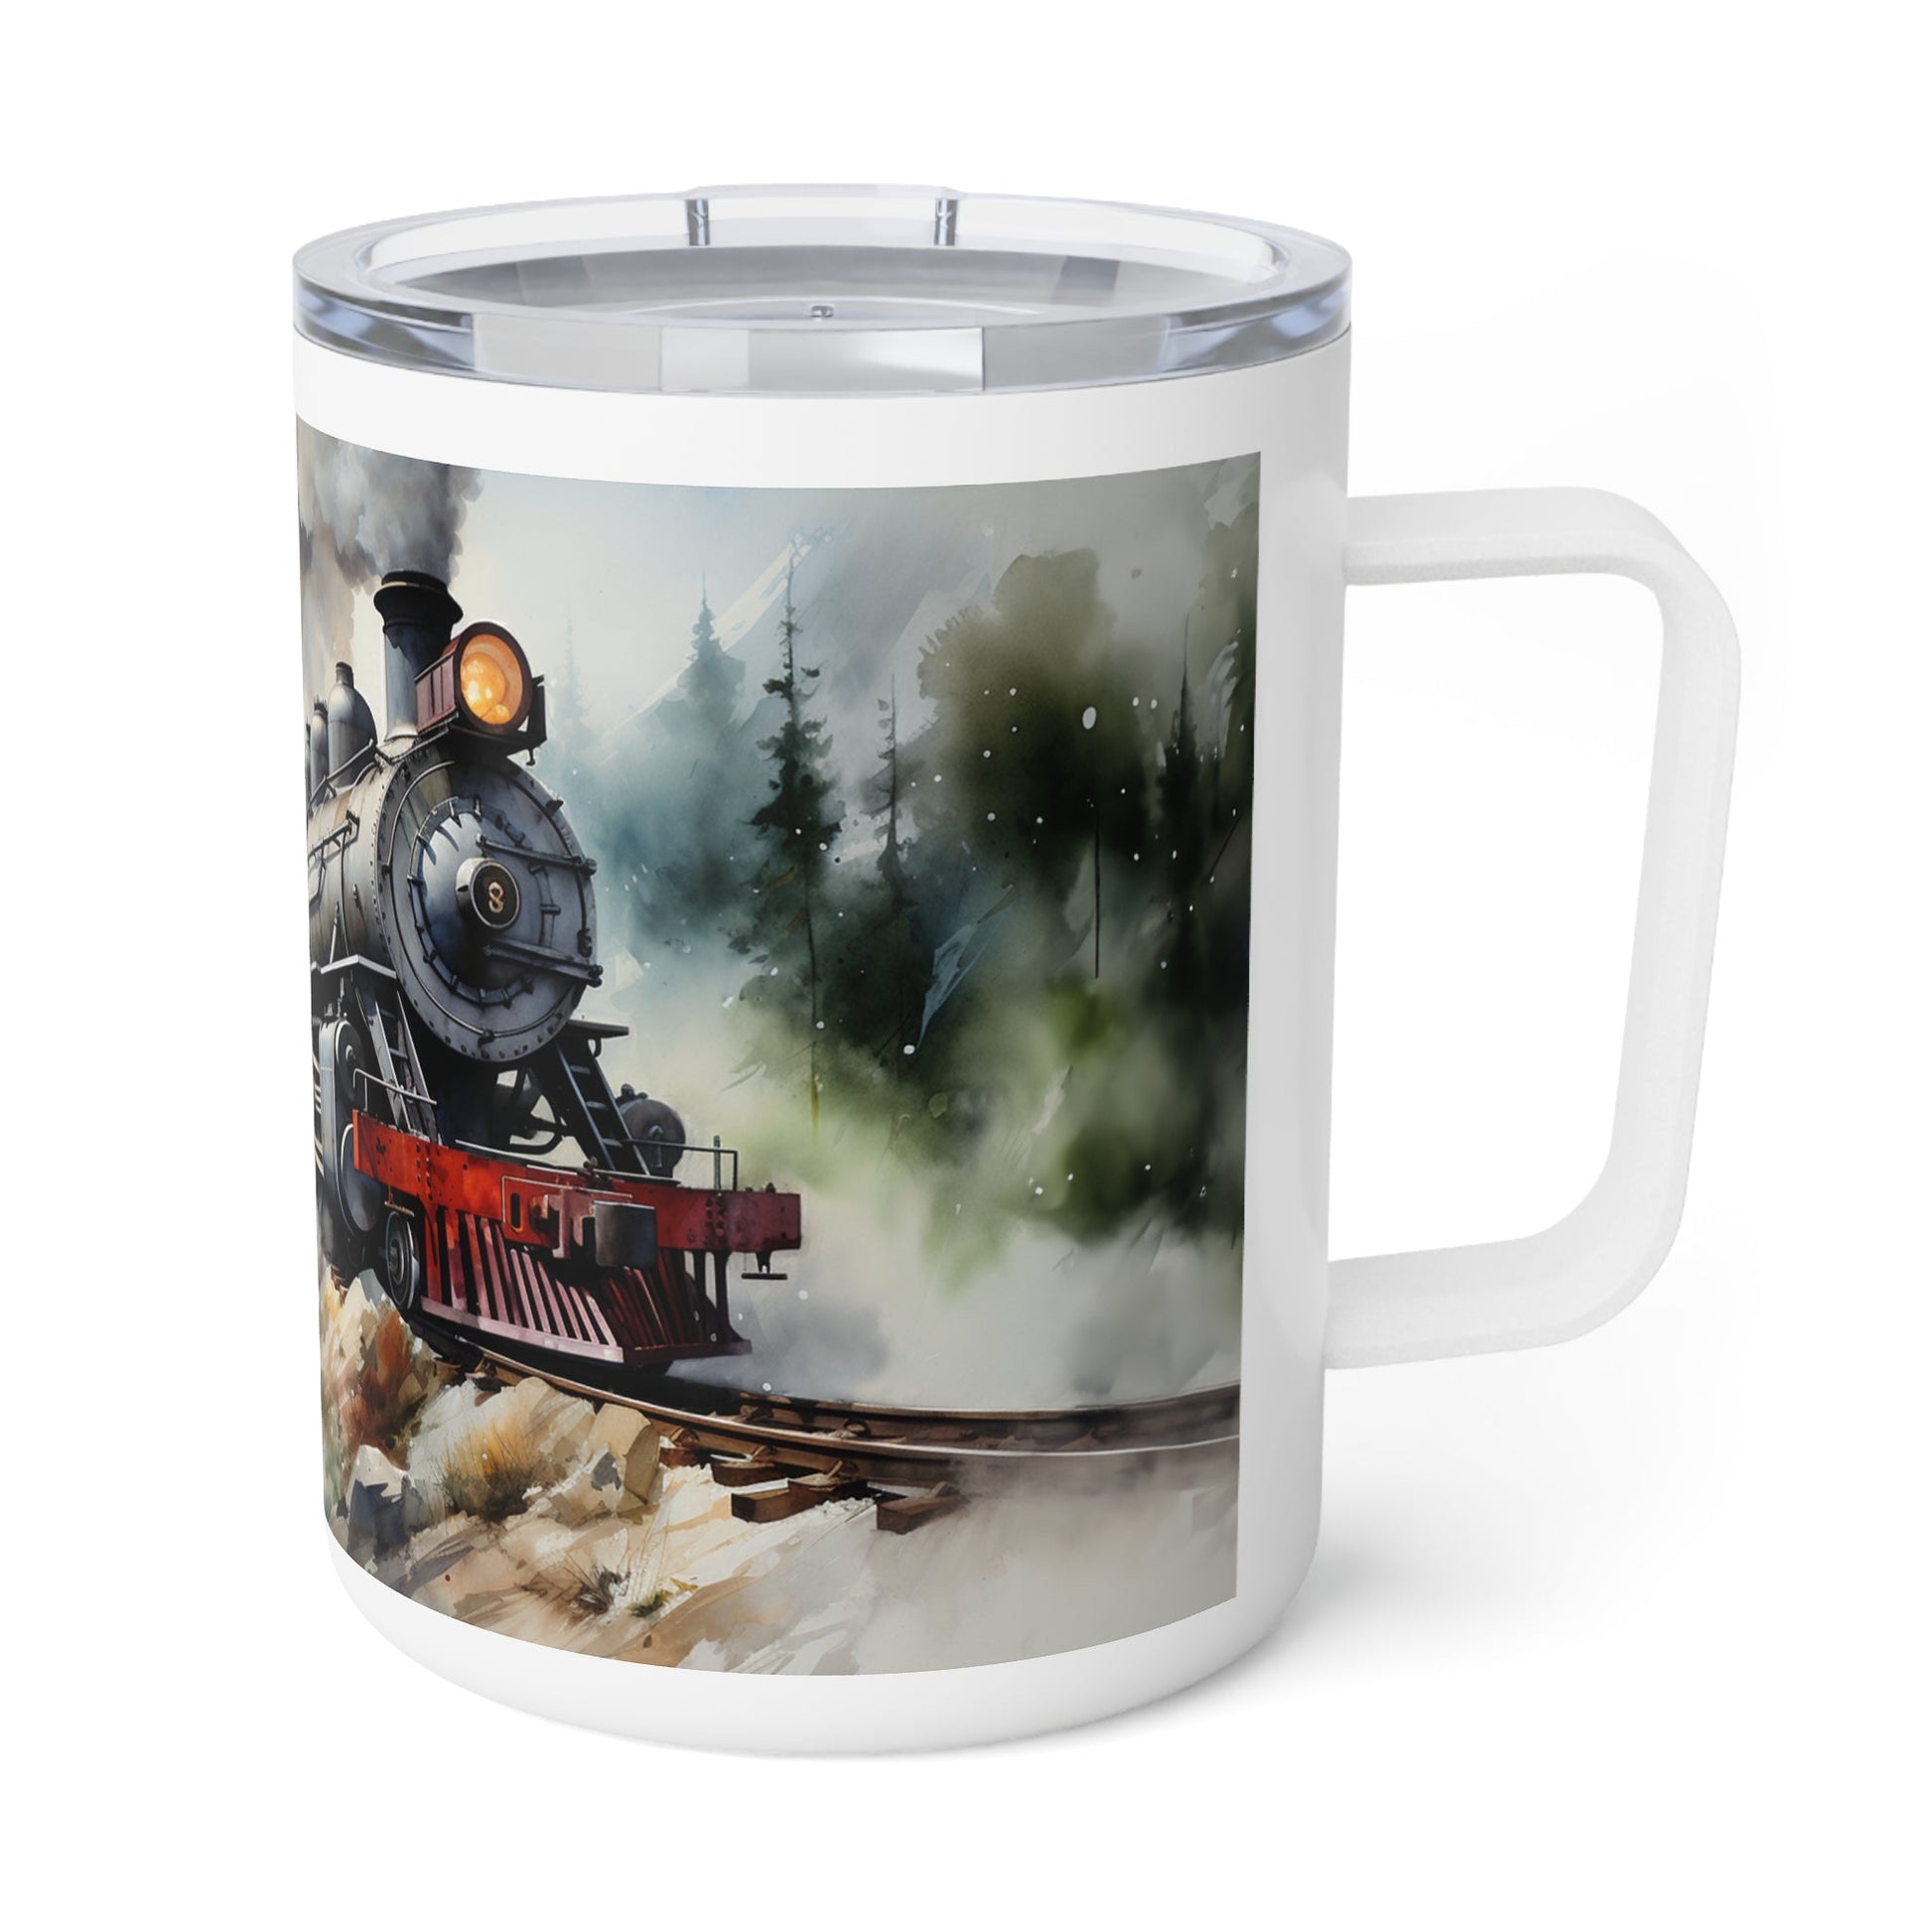 Vintage Steam Engine Custom Insulated Coffee Mug, 10oz - Train Lover Gift - FlooredByArt